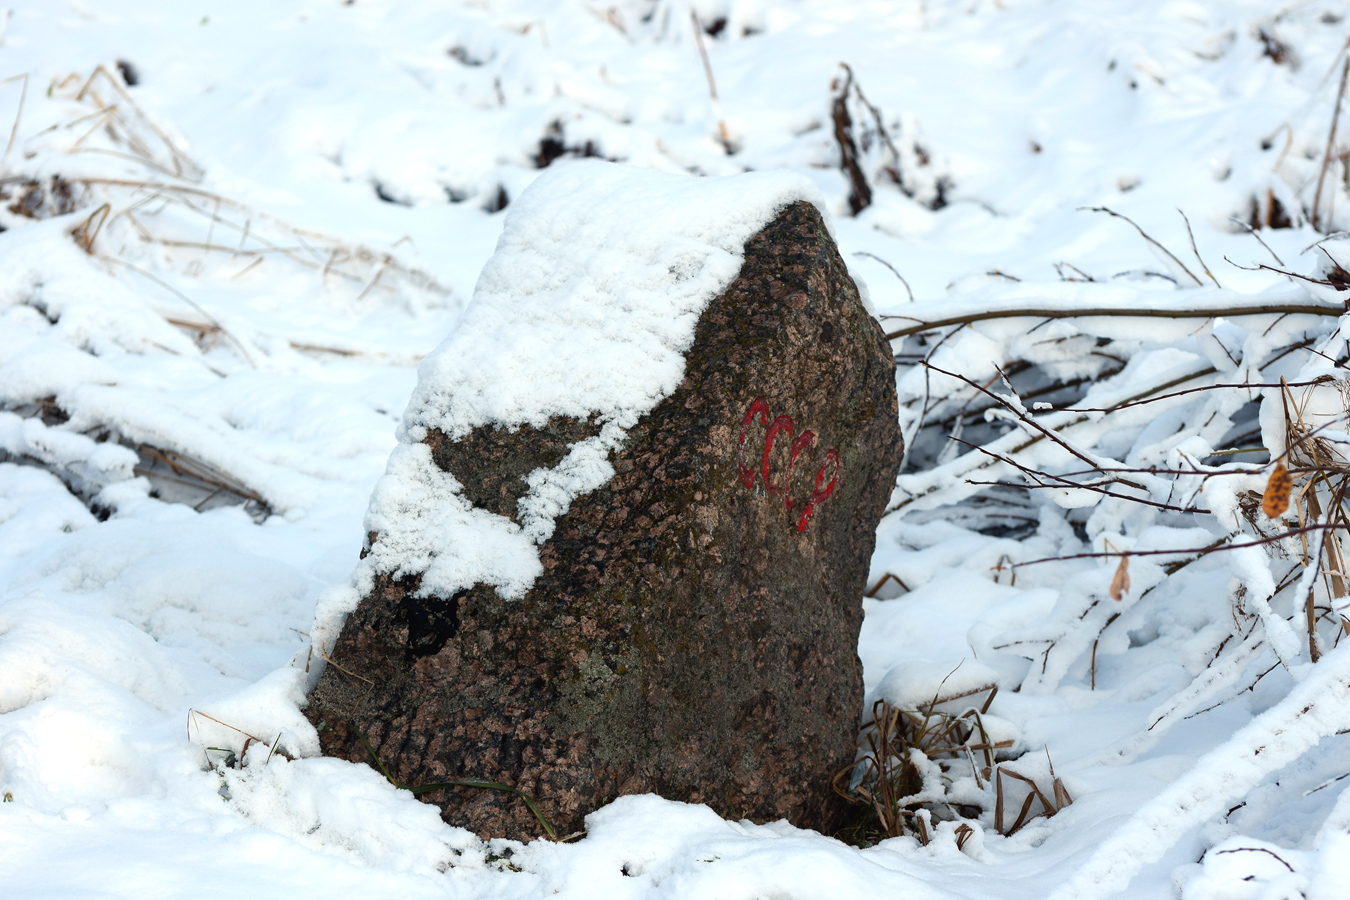 October 28, 2019. The boundary stone in Pogrankondushi village